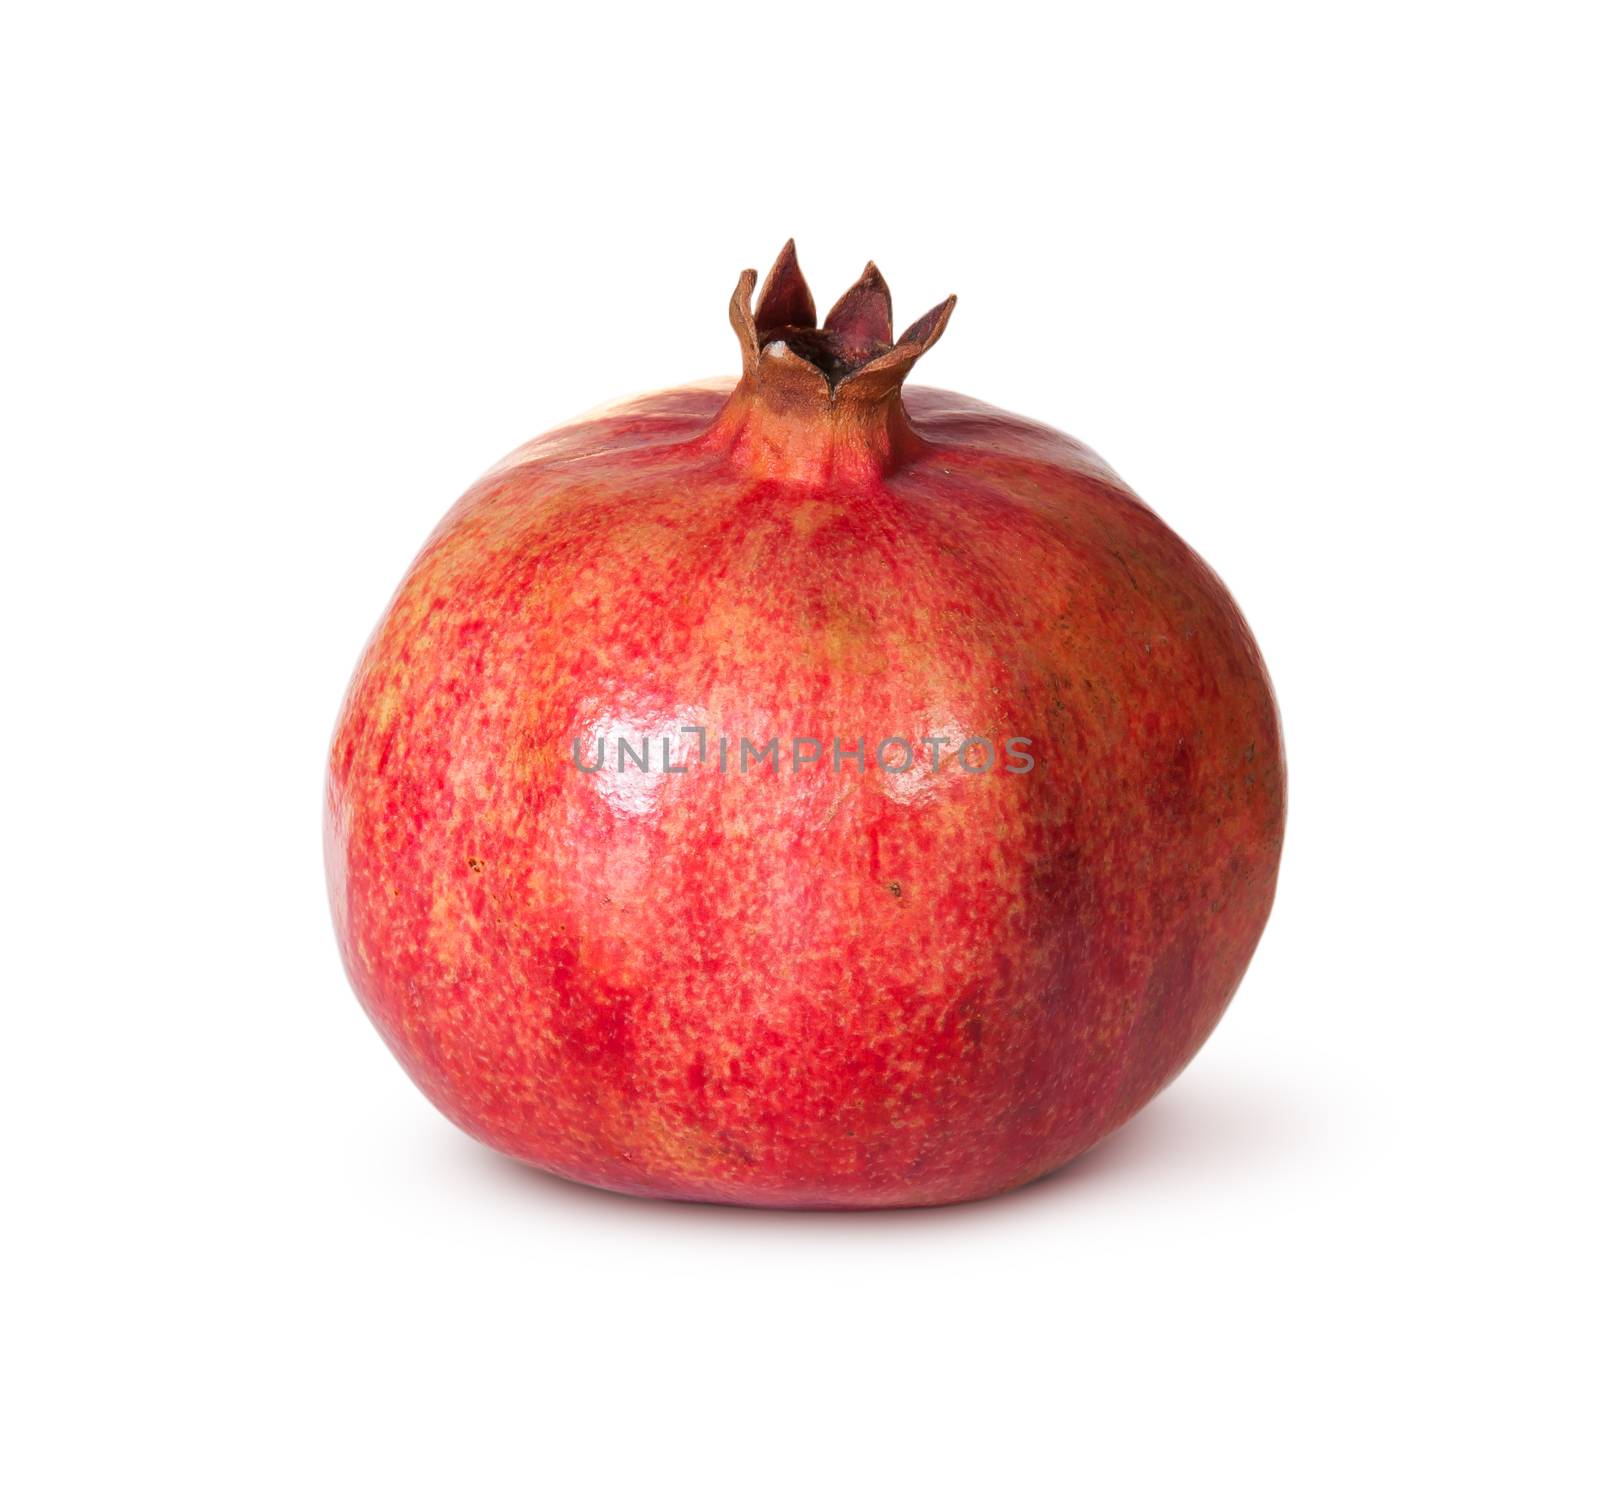 Juicy Ripe Pomegranate by Cipariss